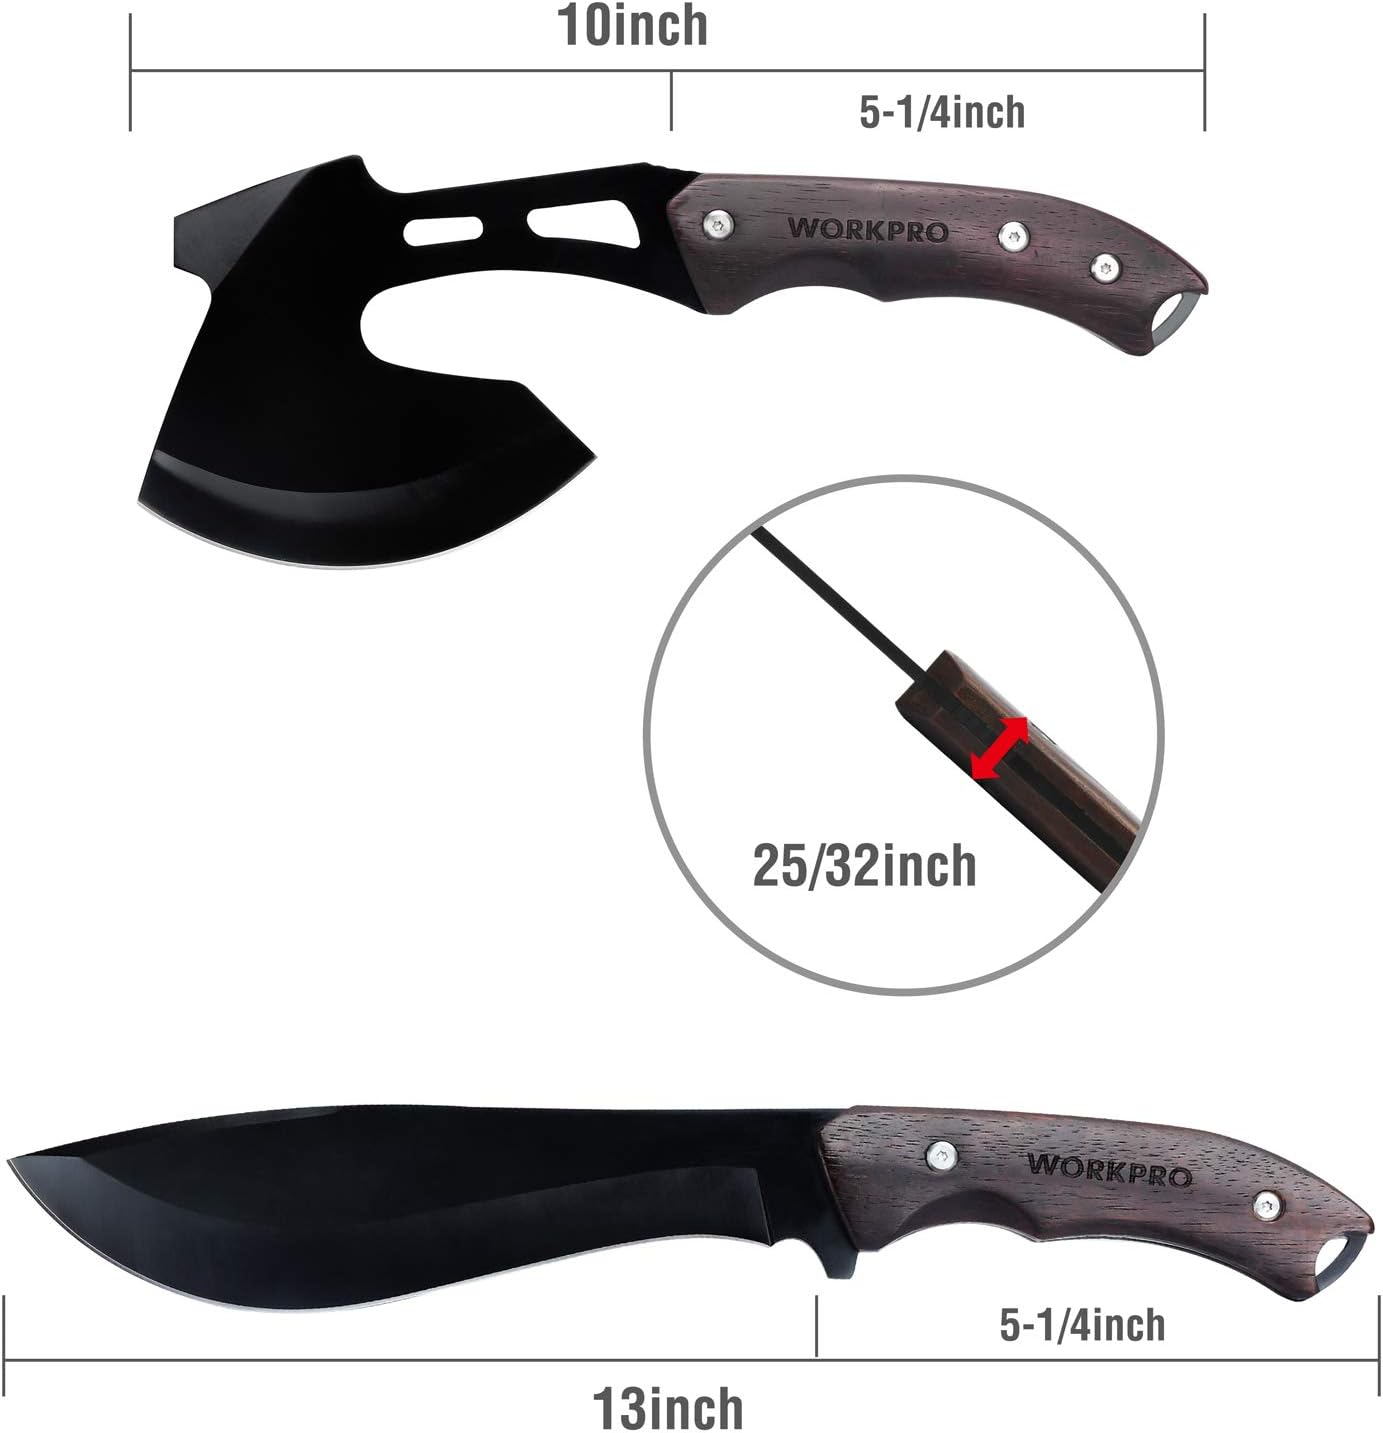 WorkPro Axe & Knife Set